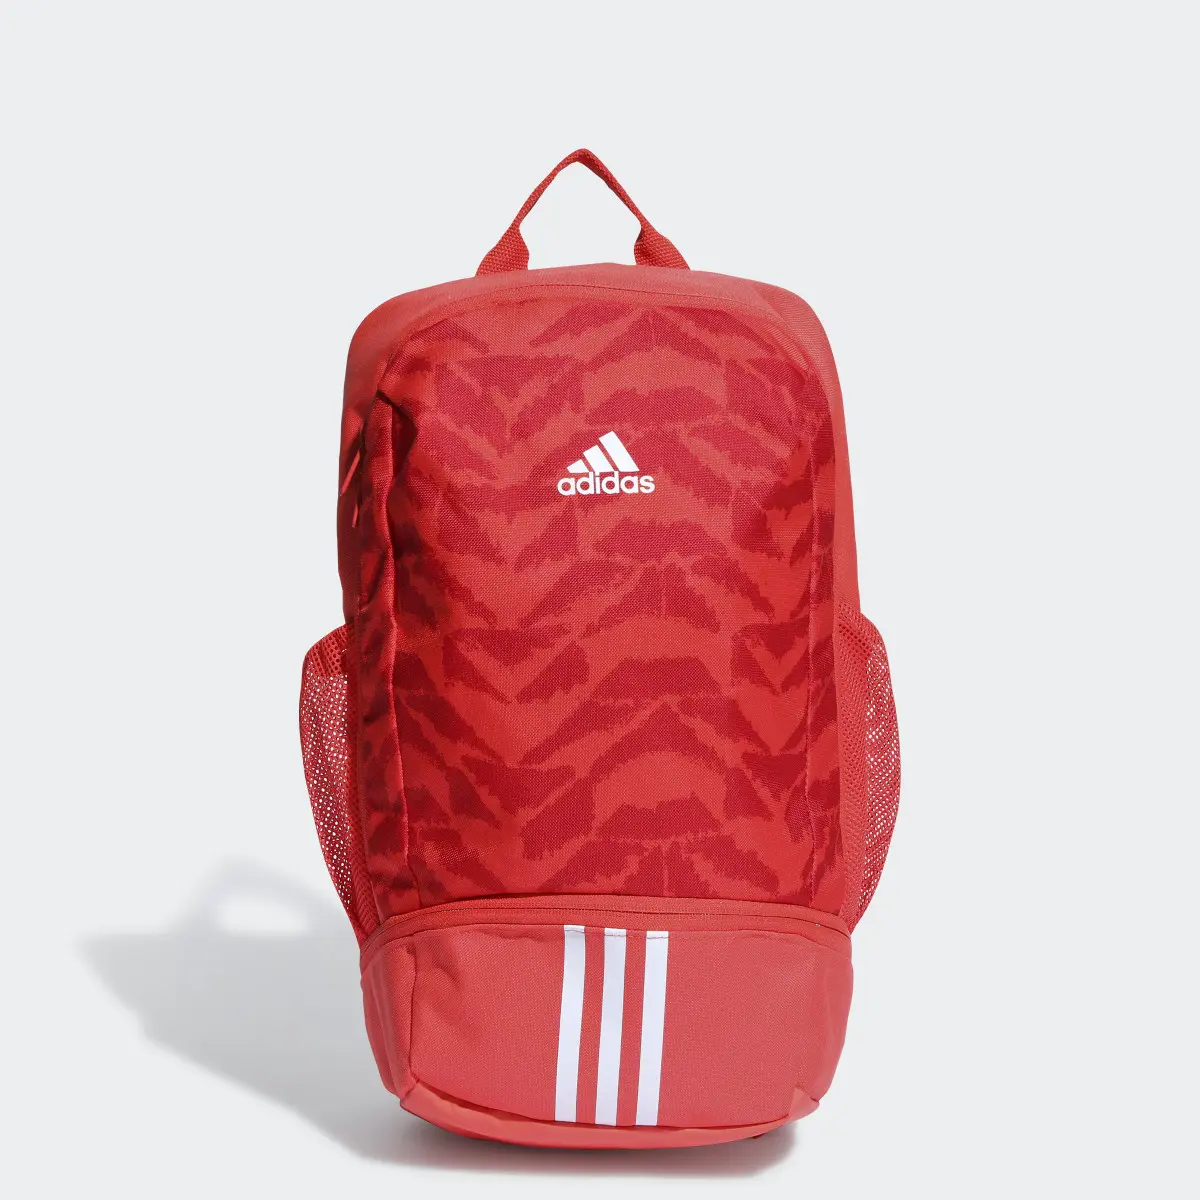 Adidas Football Backpack. 1